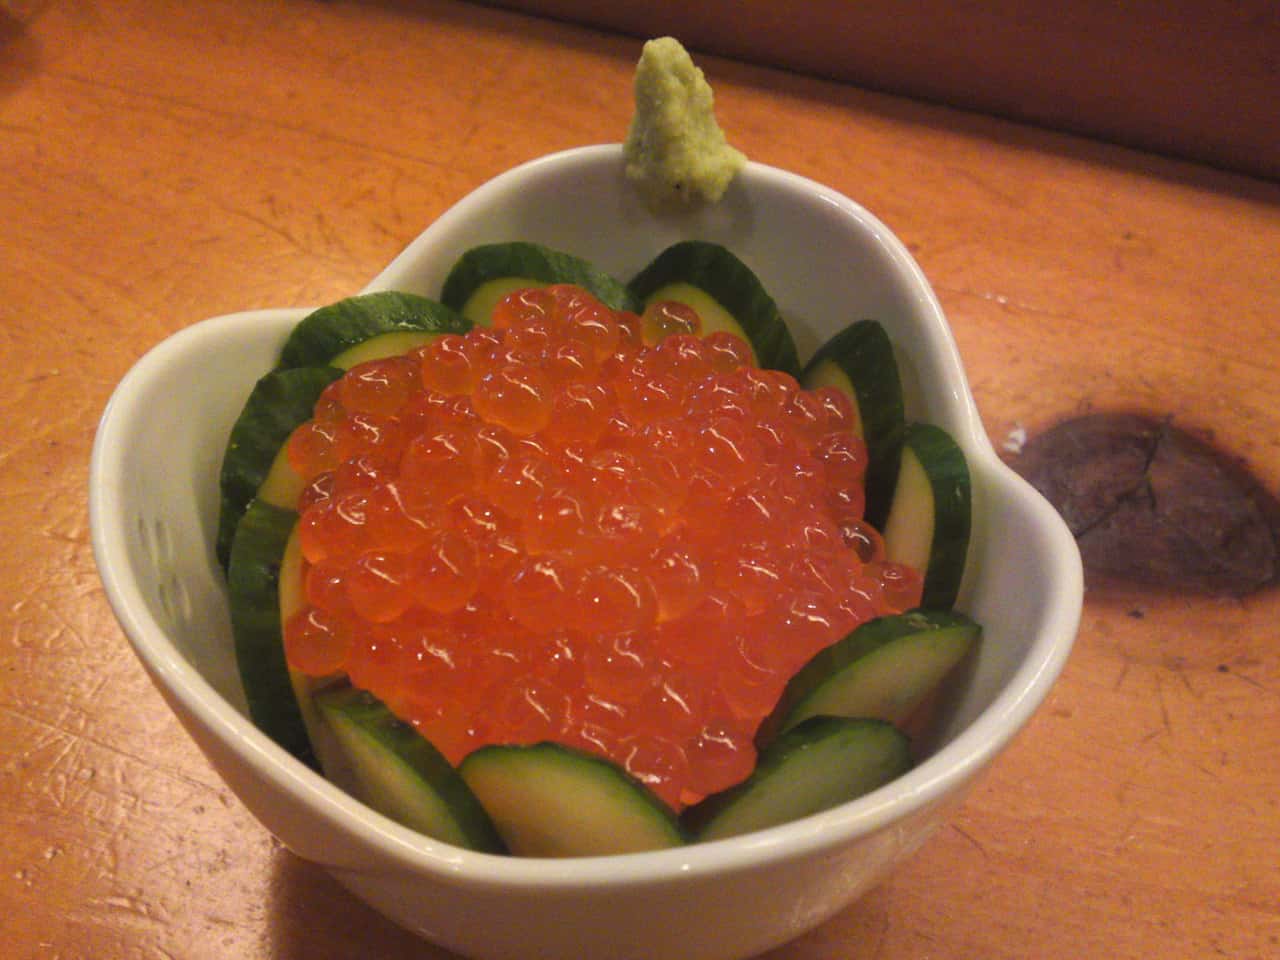 “Ikura/Salmon roe” ko donburi with sliced cucumber and grated fresh wasabi